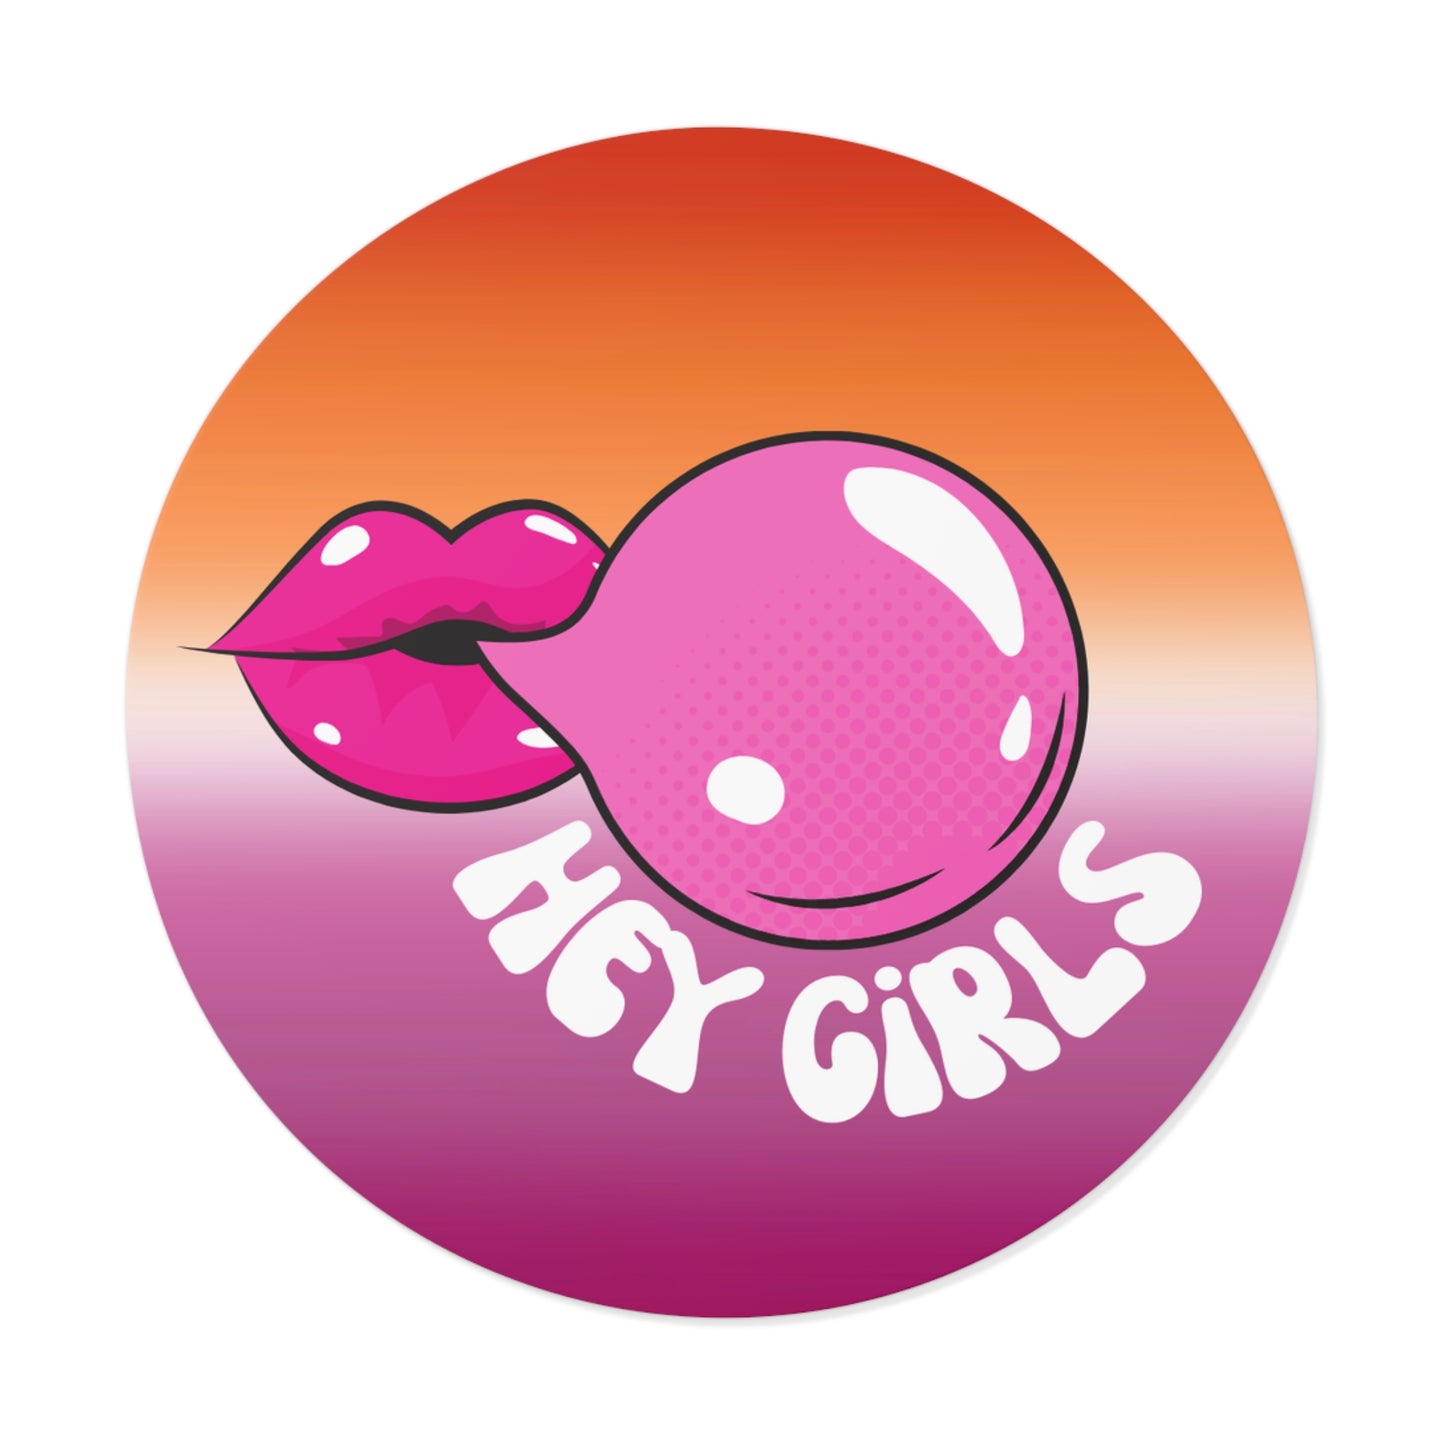 "Hey Girls" Lesbian Pride vinyl sticker